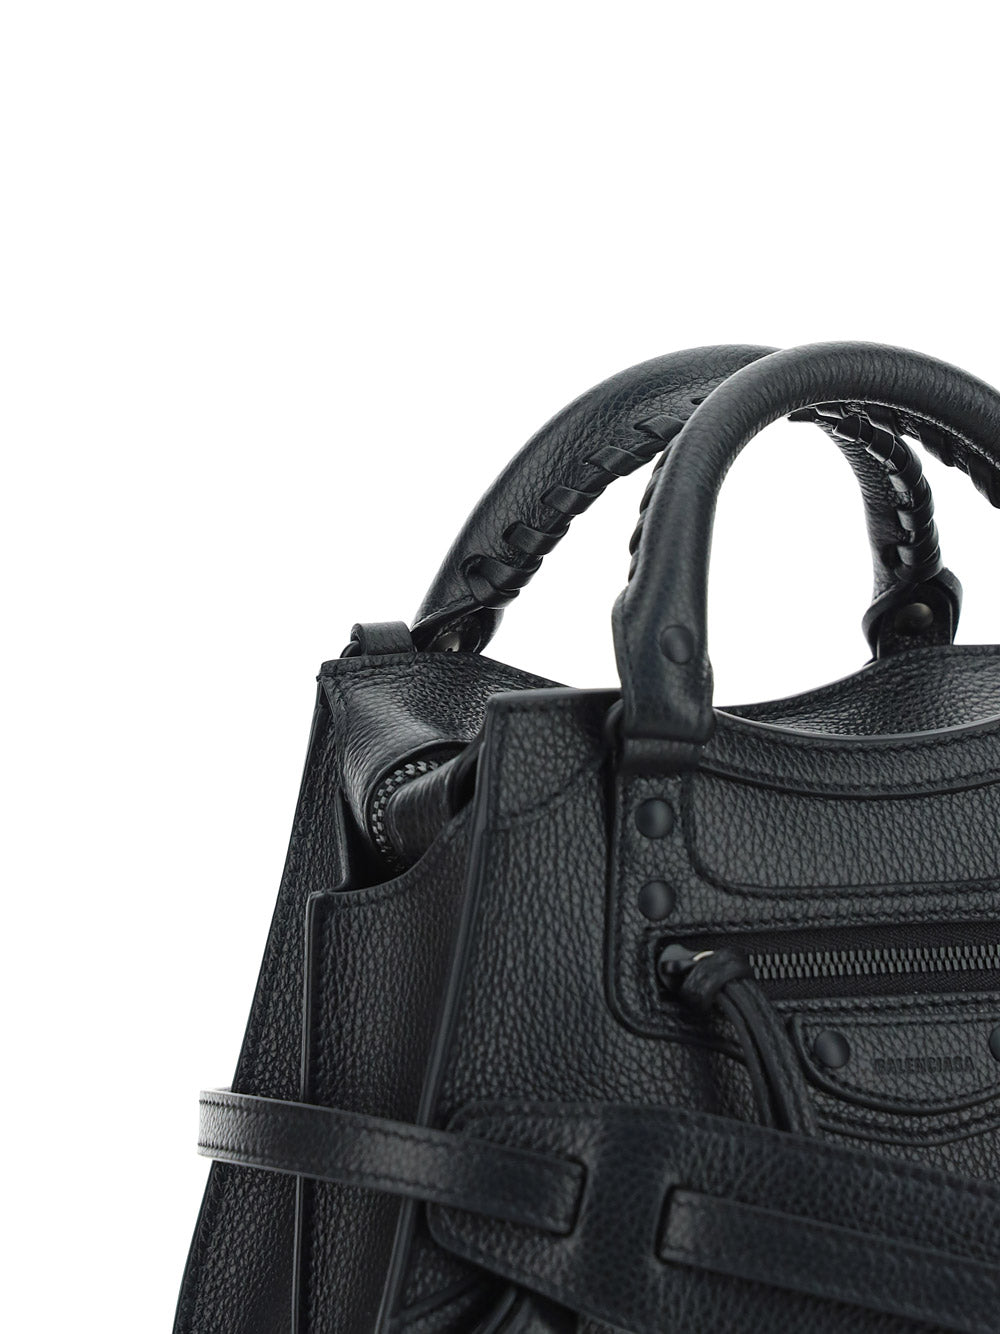 Neo Classic City Mini Handbag - Black.